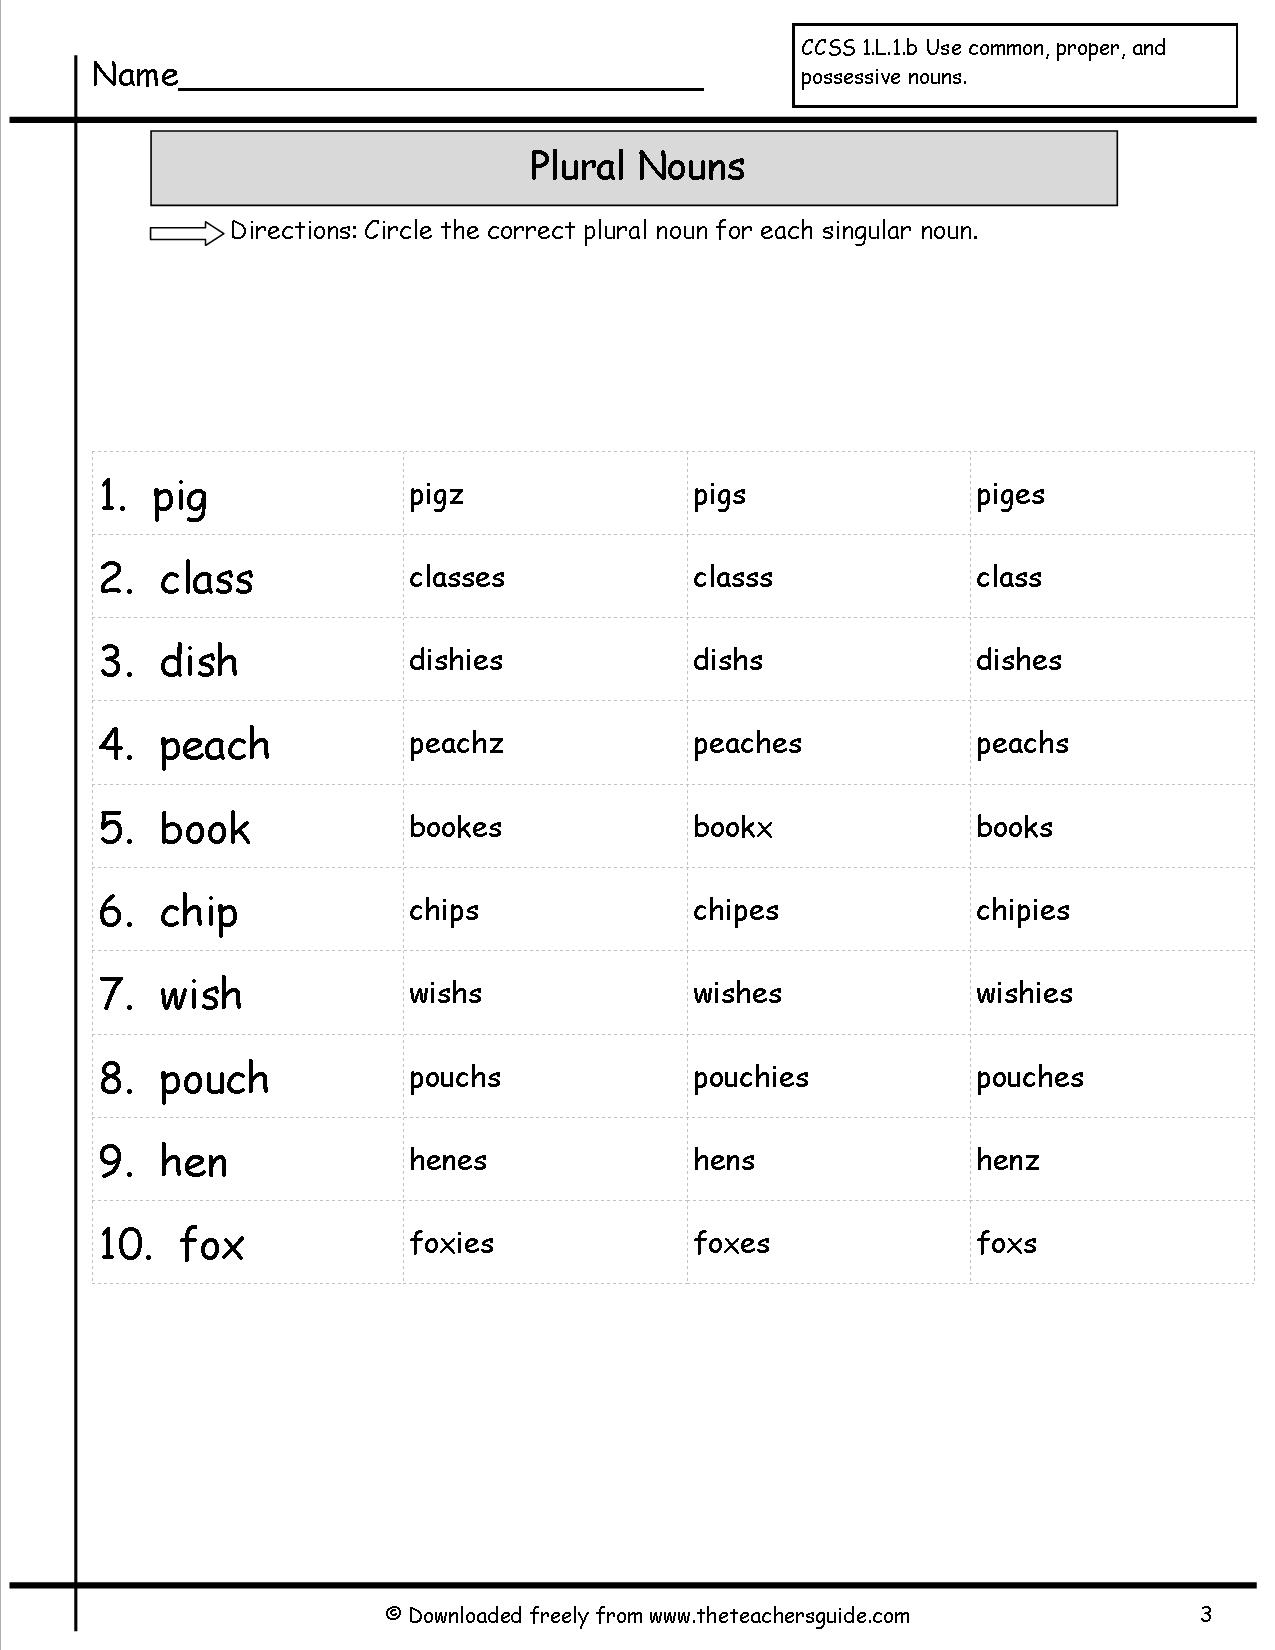 possessive-nouns-worksheet-worksheets-99worksheets